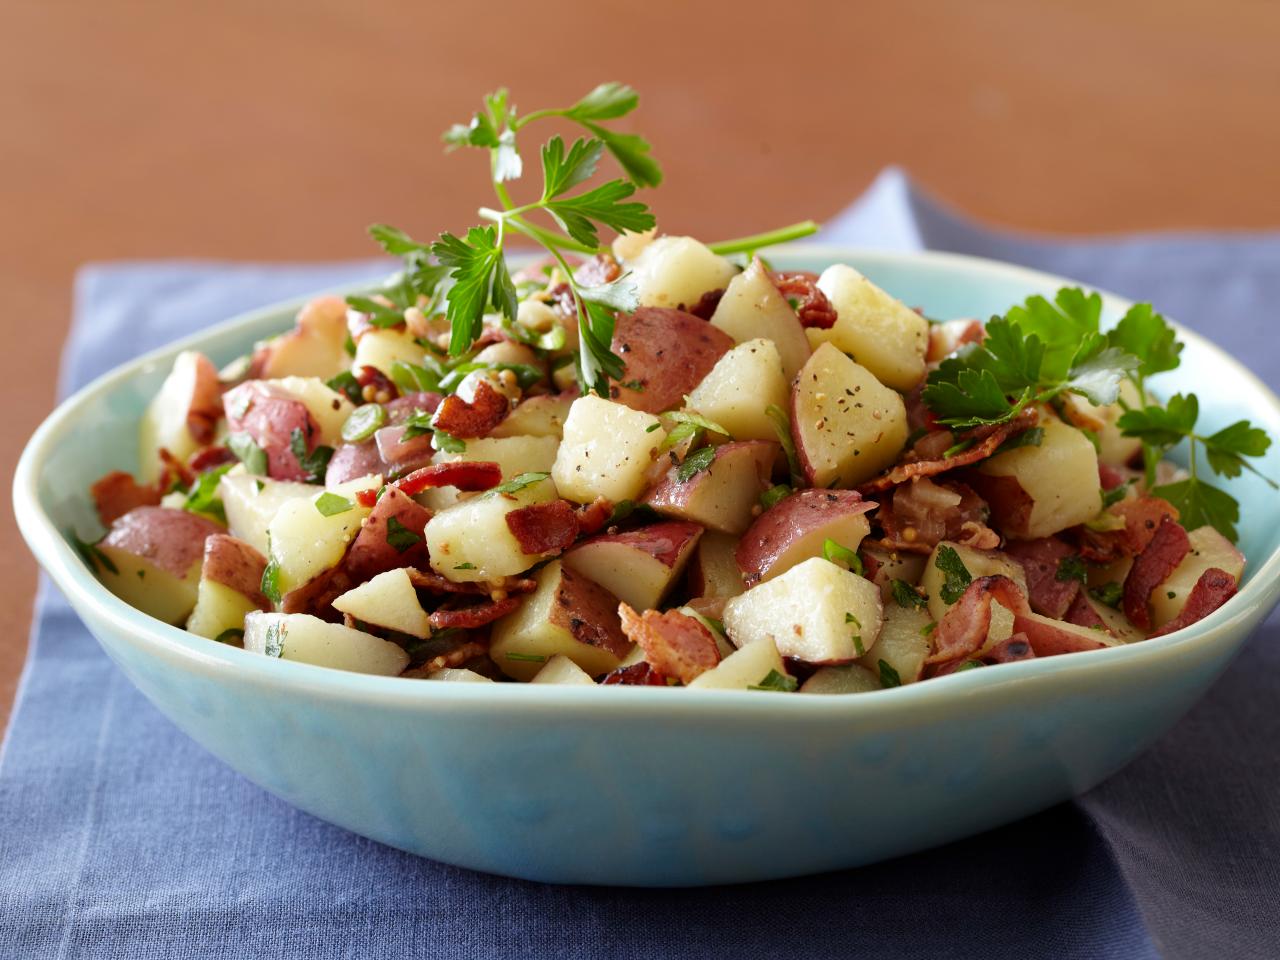 https://food.fnr.sndimg.com/content/dam/images/food/fullset/2011/6/8/0/GL1B09_german-potato-salad_s4x3.jpg.rend.hgtvcom.1280.960.suffix/1382539763830.jpeg